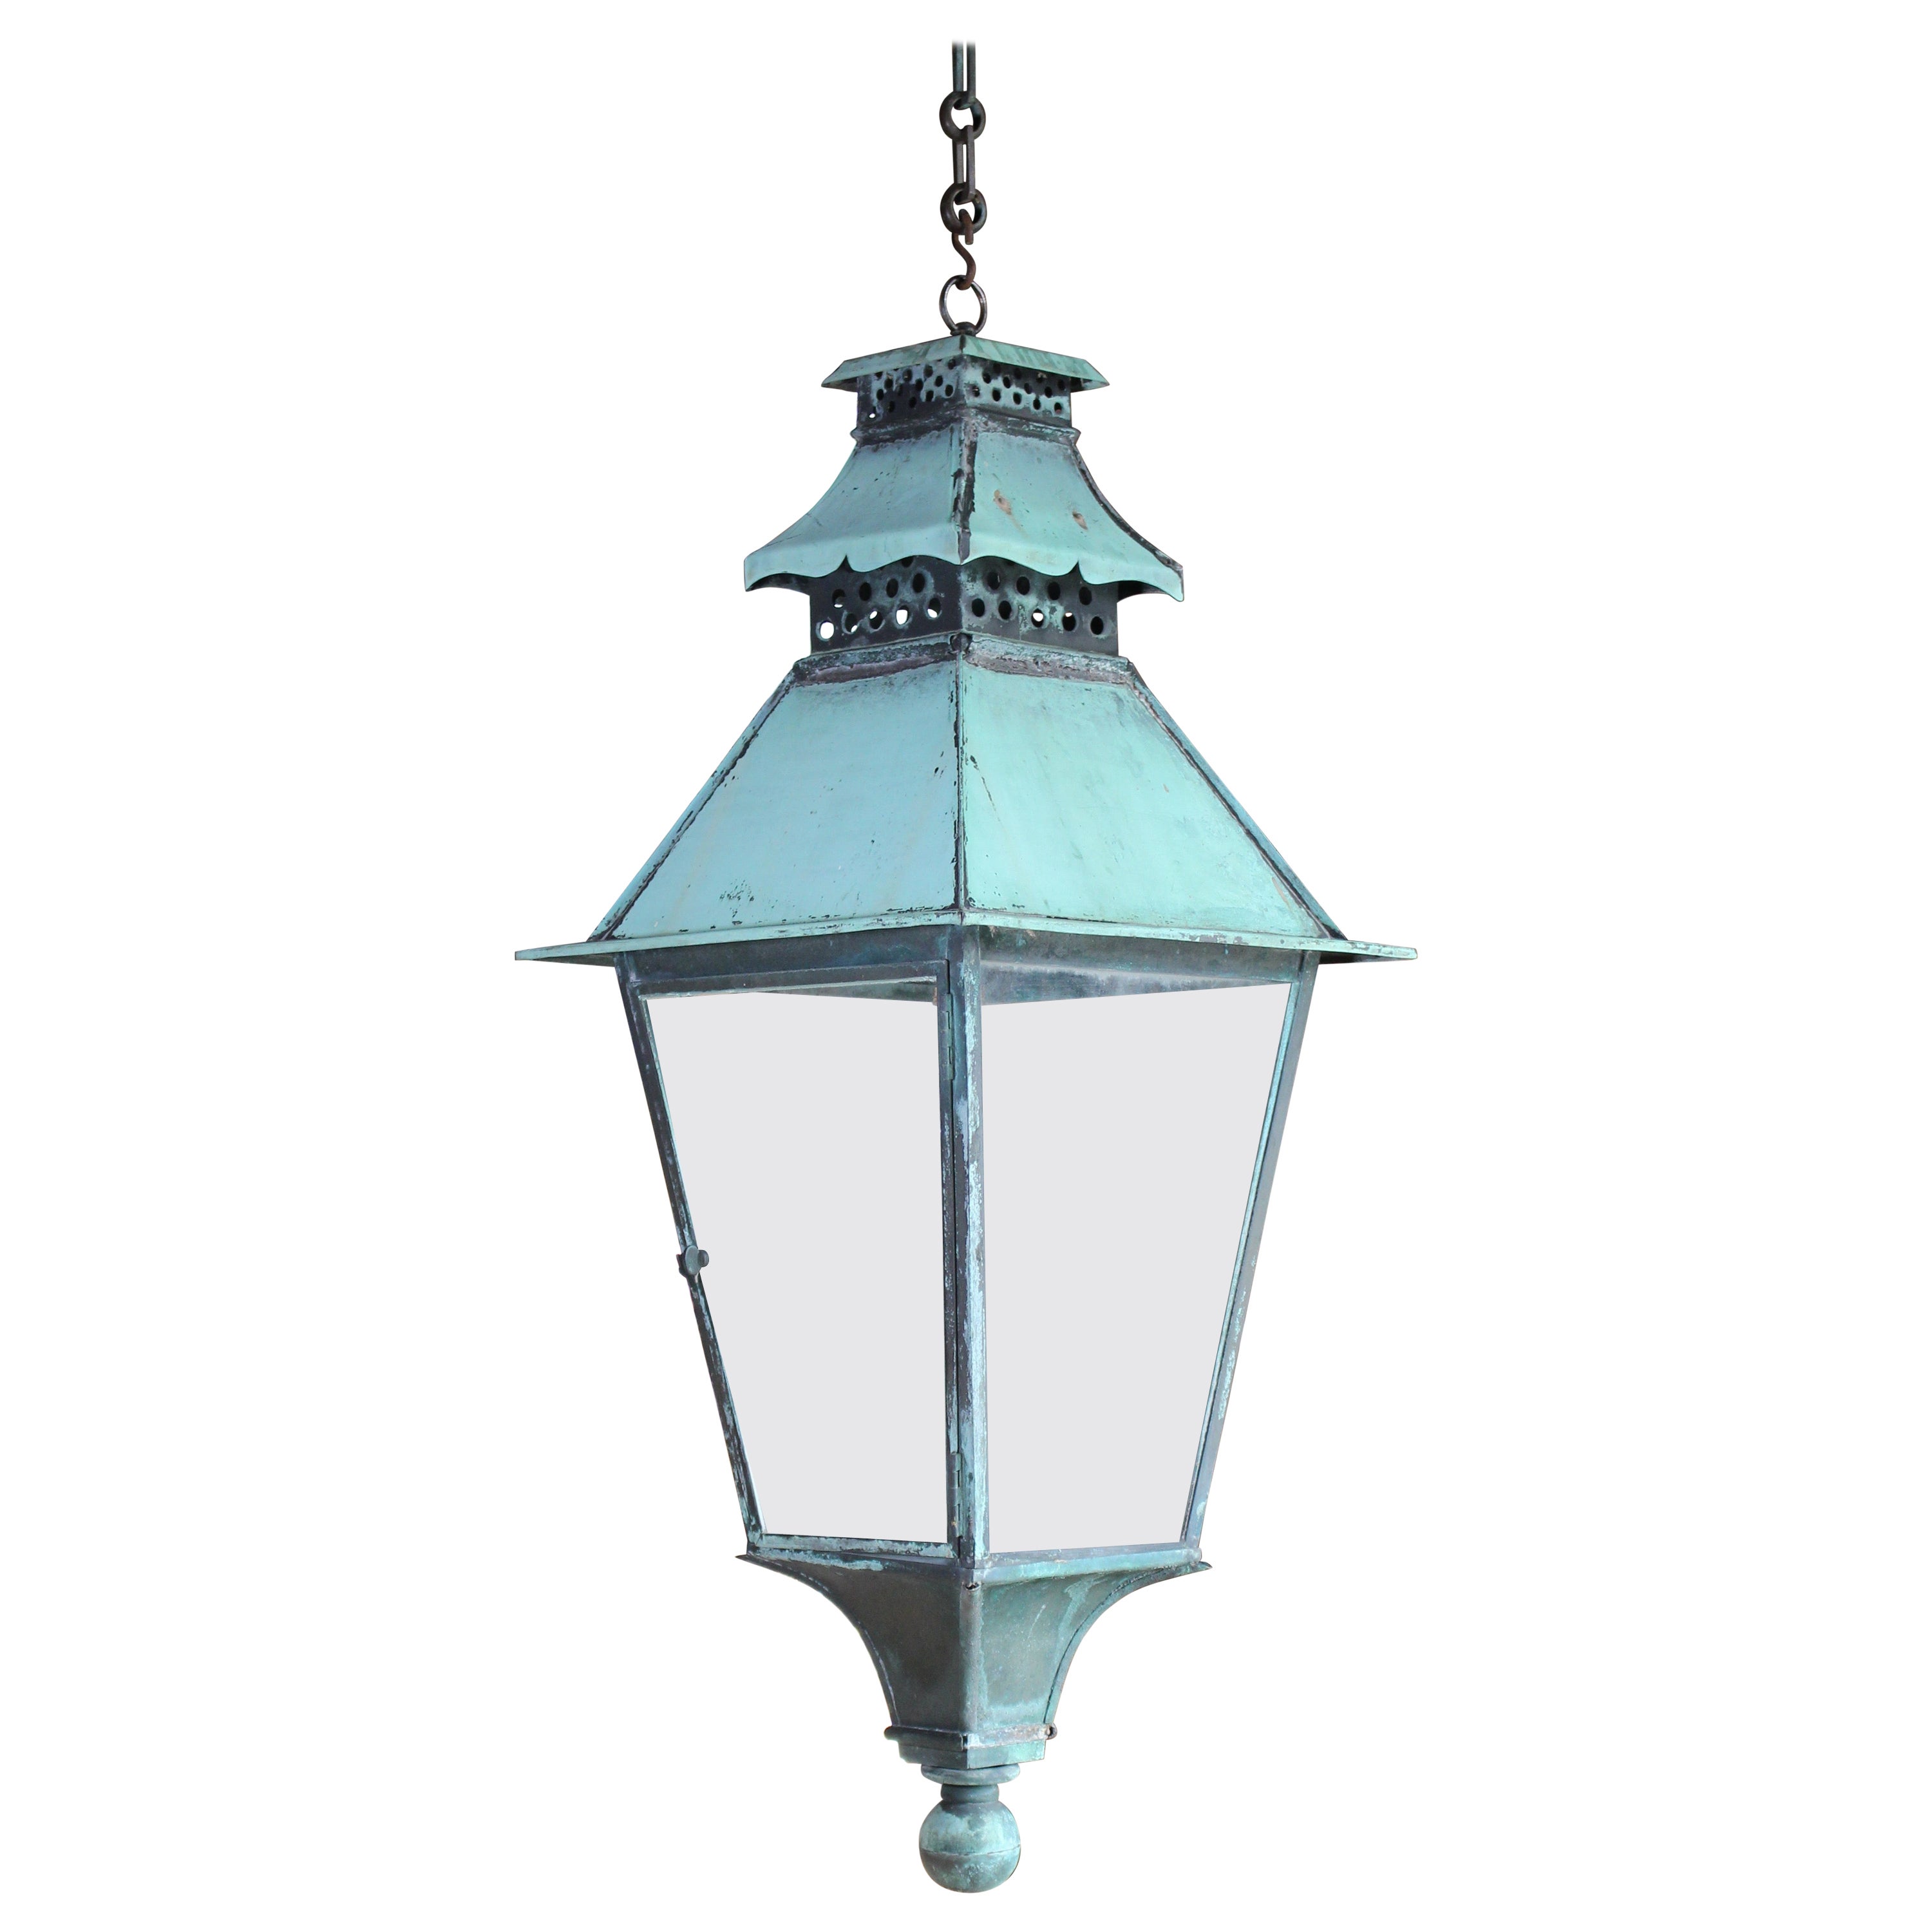 19th Century Large English Victorian Pagoda Verdigris Copper Glazed Lantern For Sale